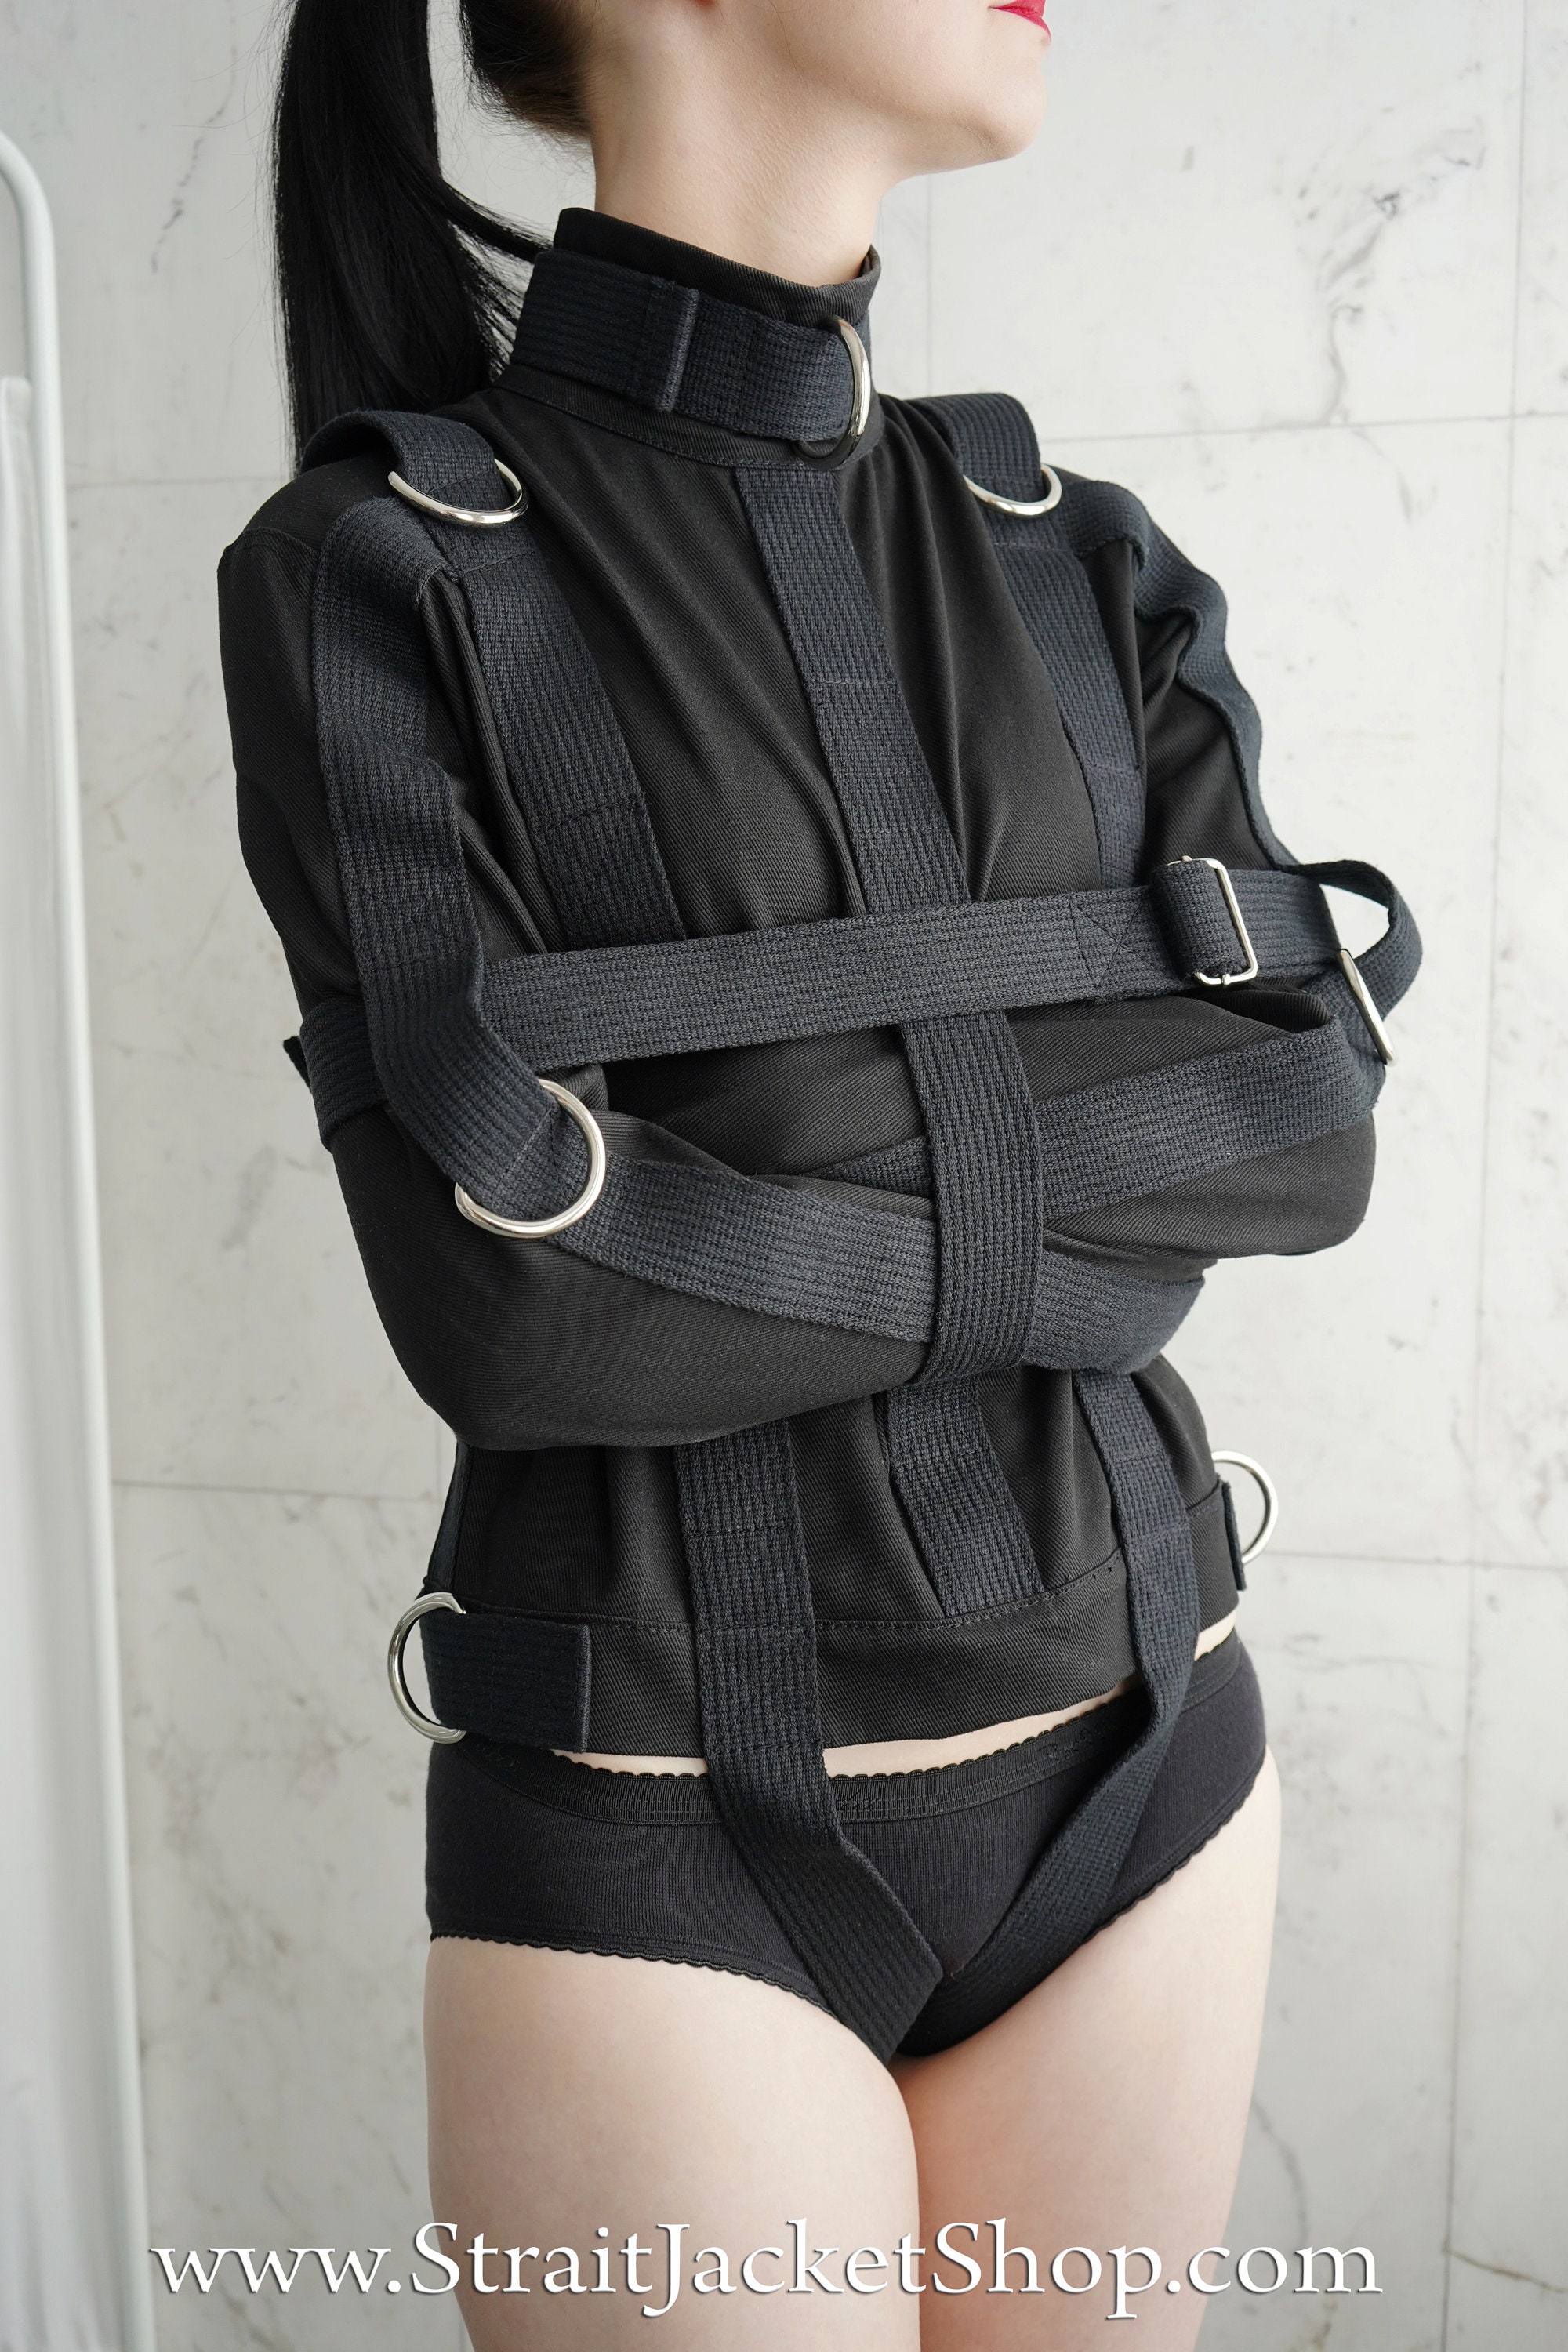 BDSM Denim Straitjacket with heavy duty leather straps.